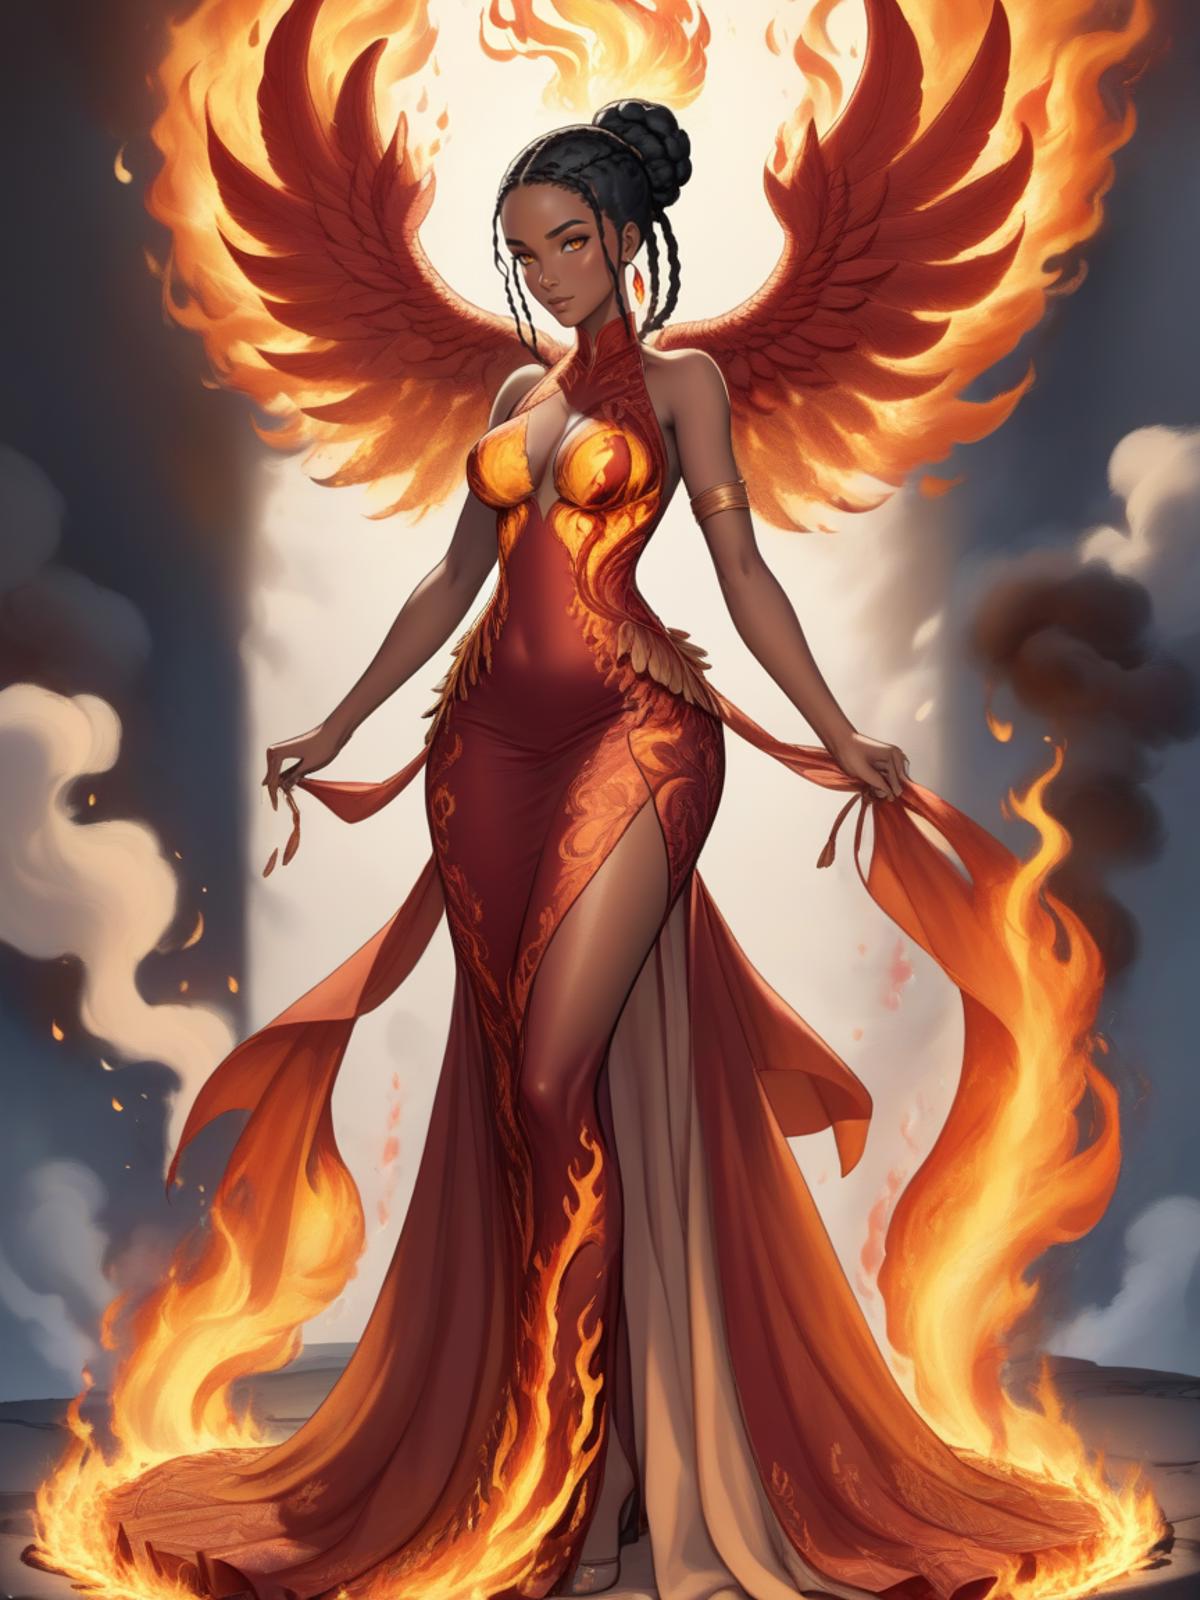 XL Phoenix Dress image by n15g